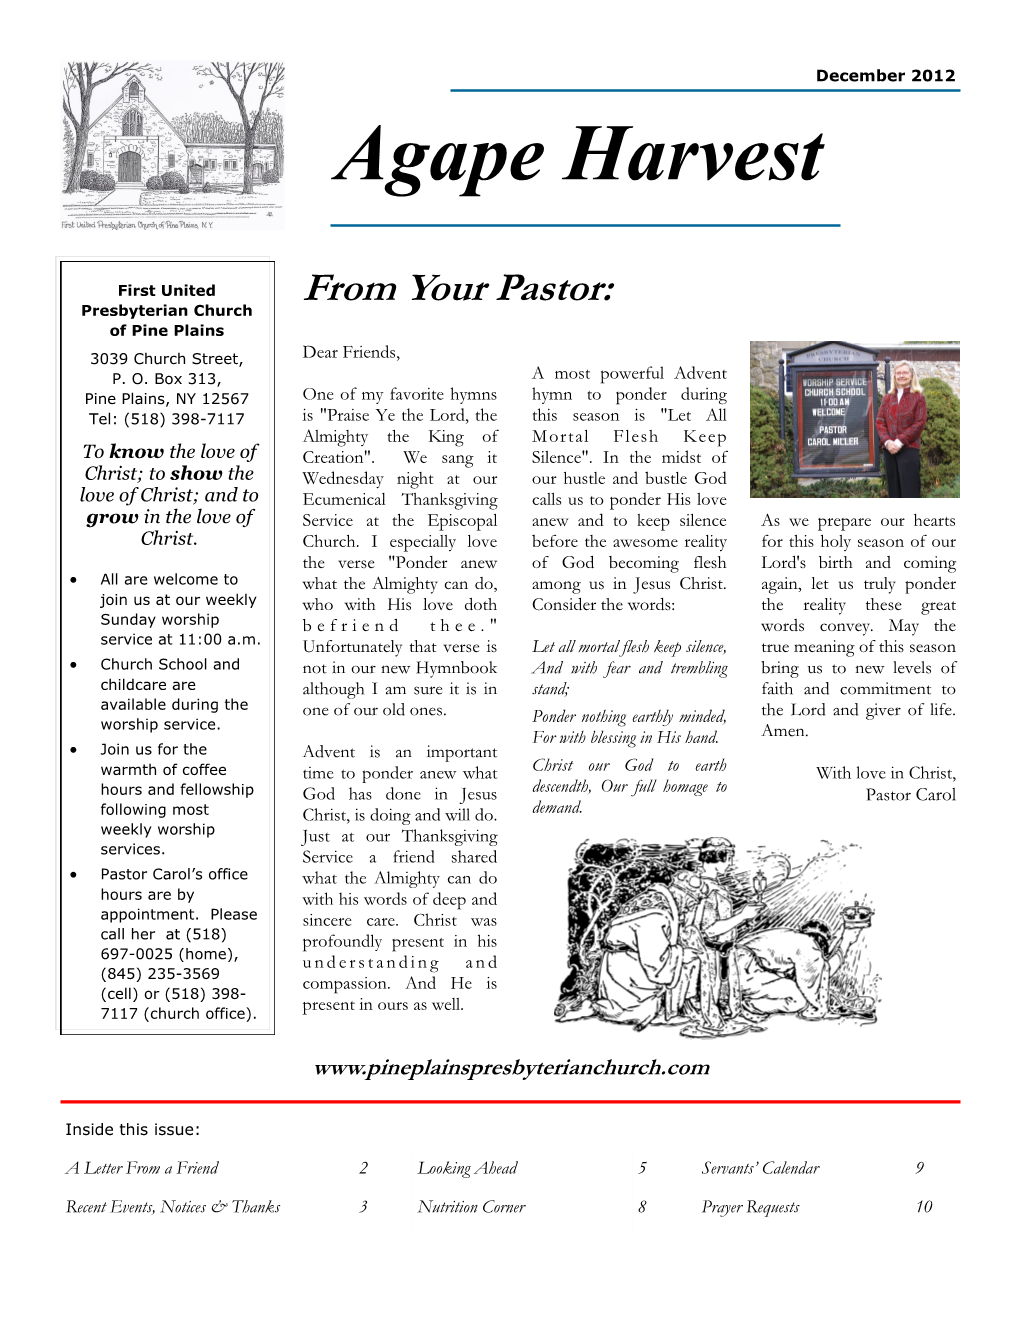 Agape Harvest